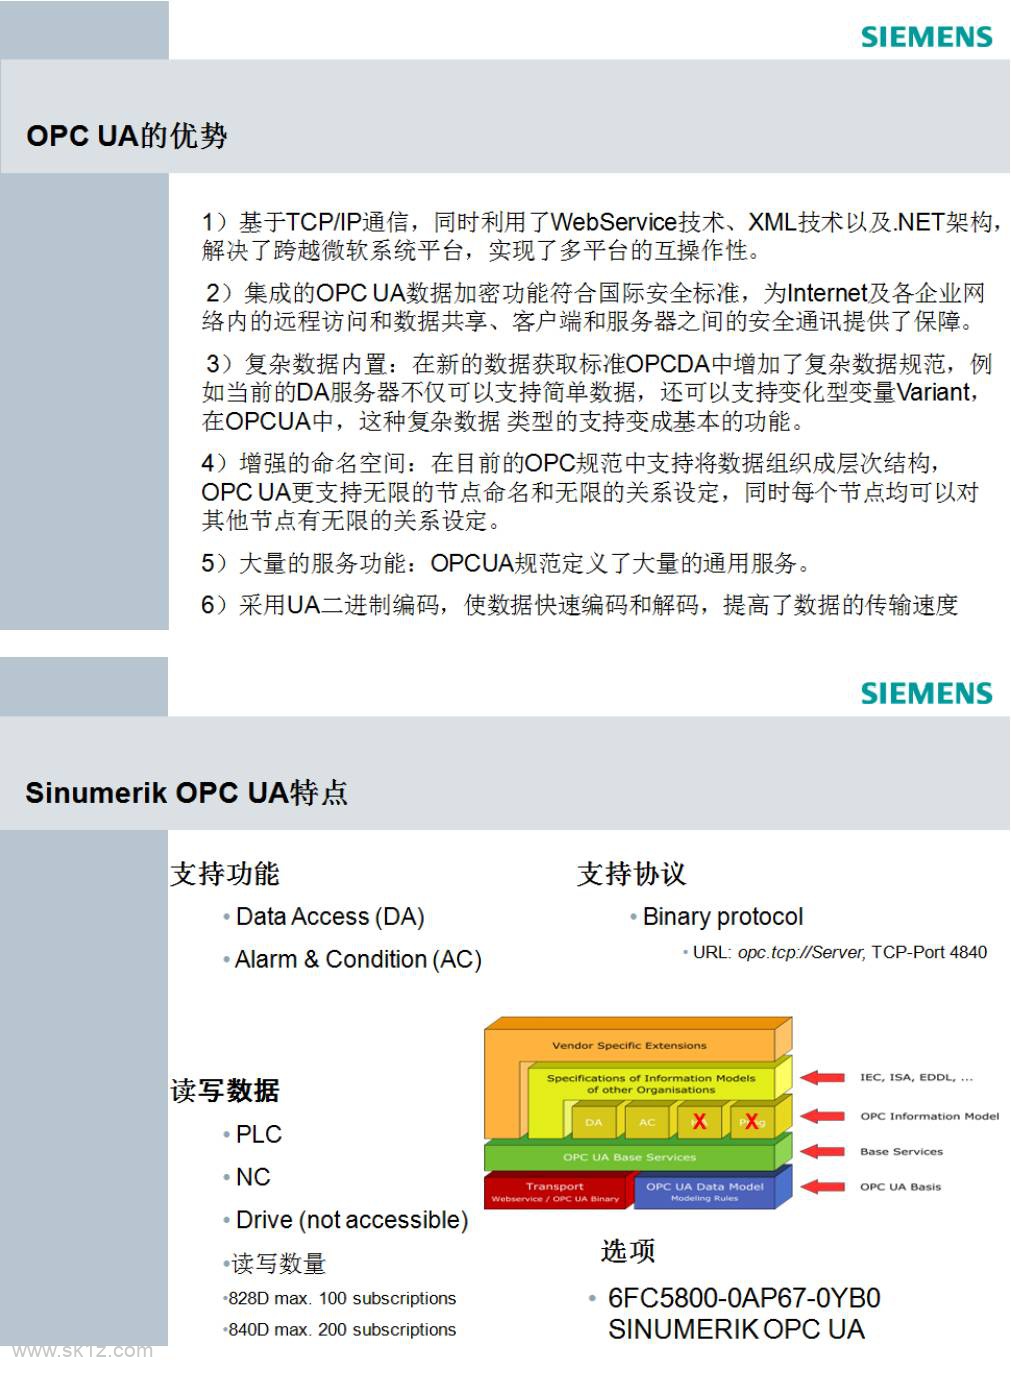 OPC工业标准及其在西门子数控上的应用简介